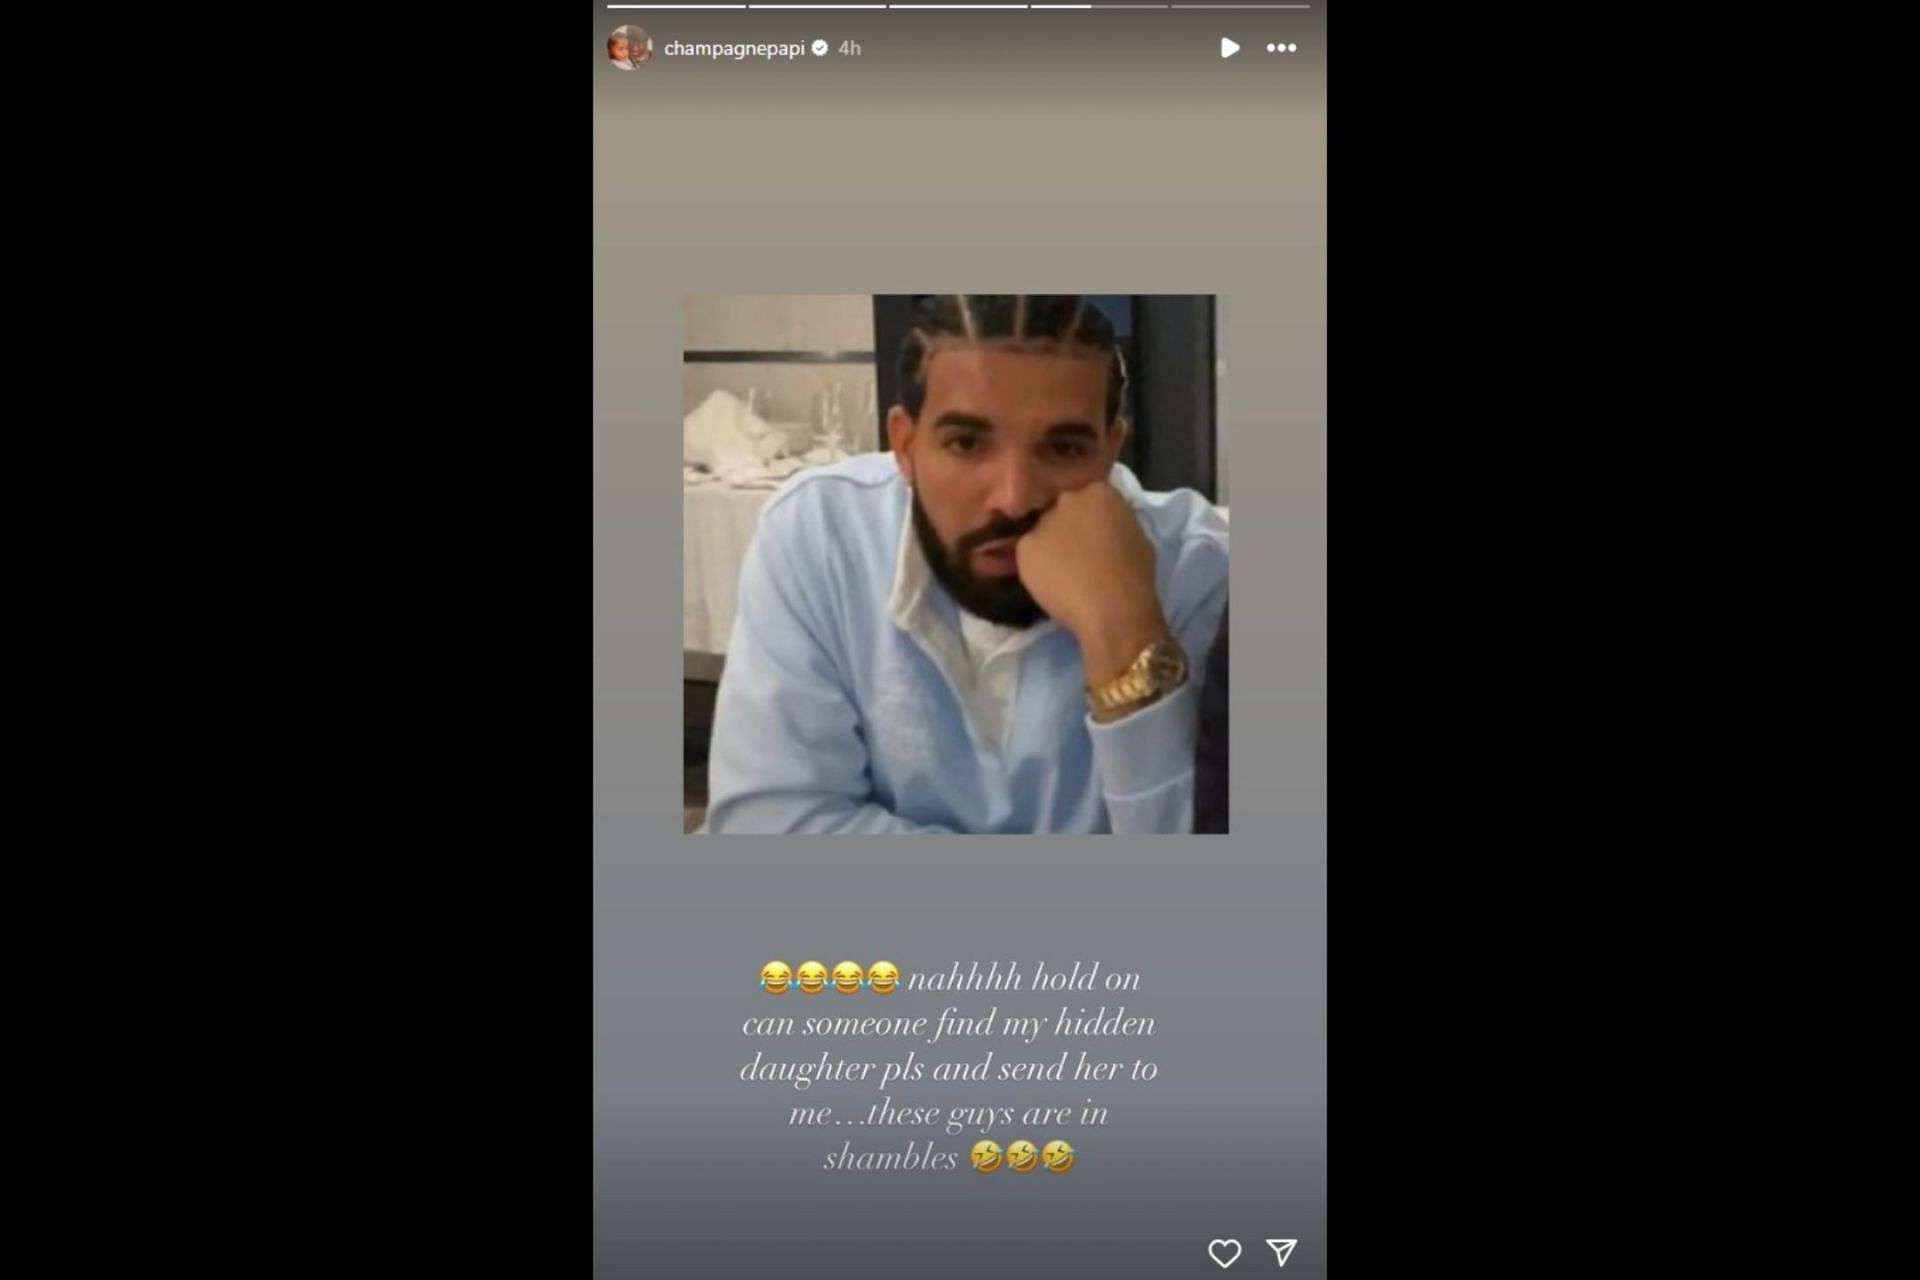 Drake responds to meet the grahams diss track (Image via champagnepapi/Instagram)